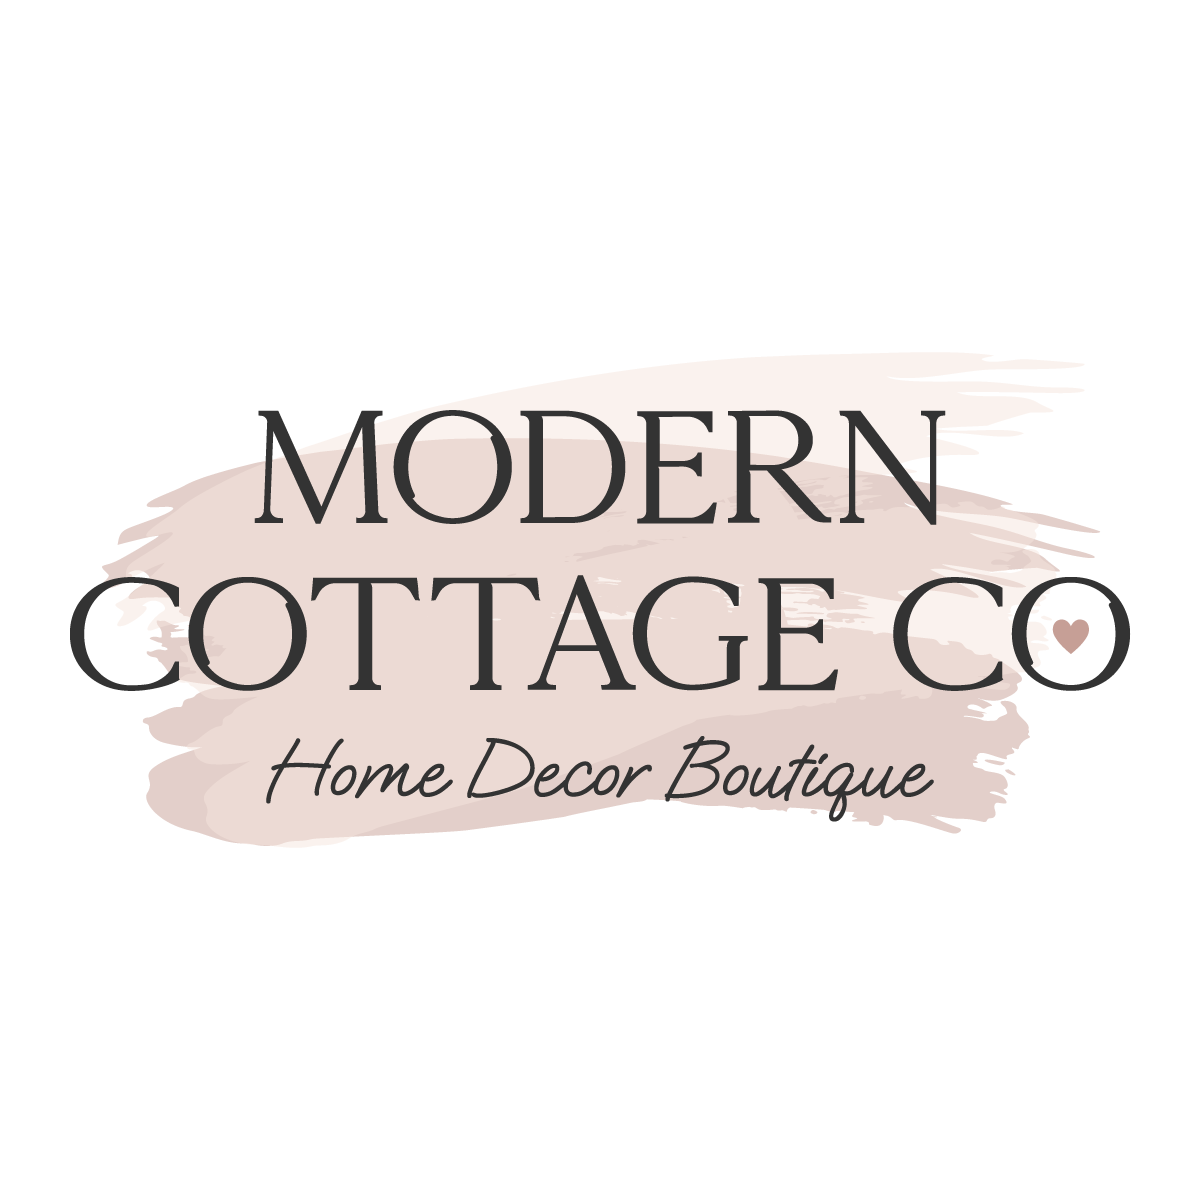 Modern Cottage Co. GIFT CARD